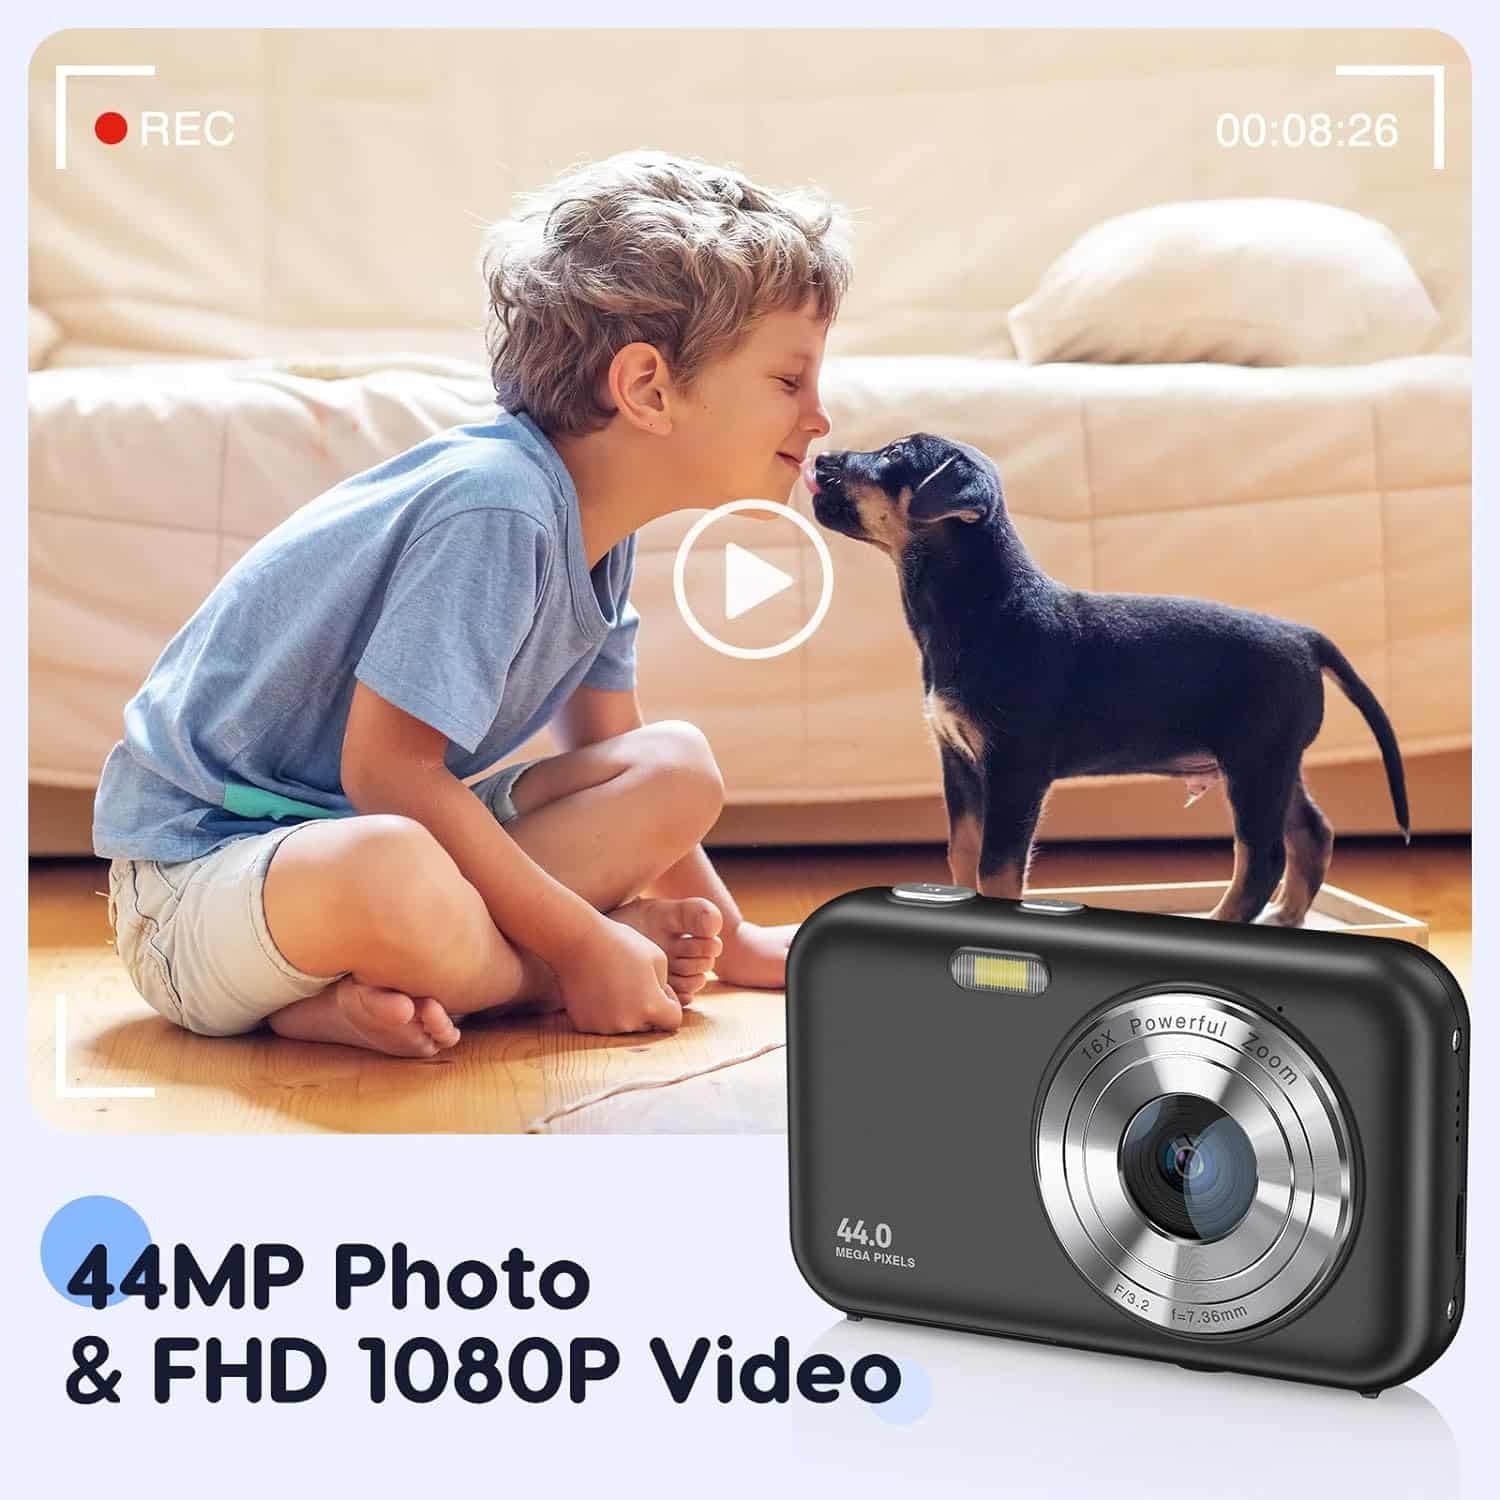 Digital Camera, FHD 1080P Kids Camera 44MP: A Fun and Versatile Photography Companion